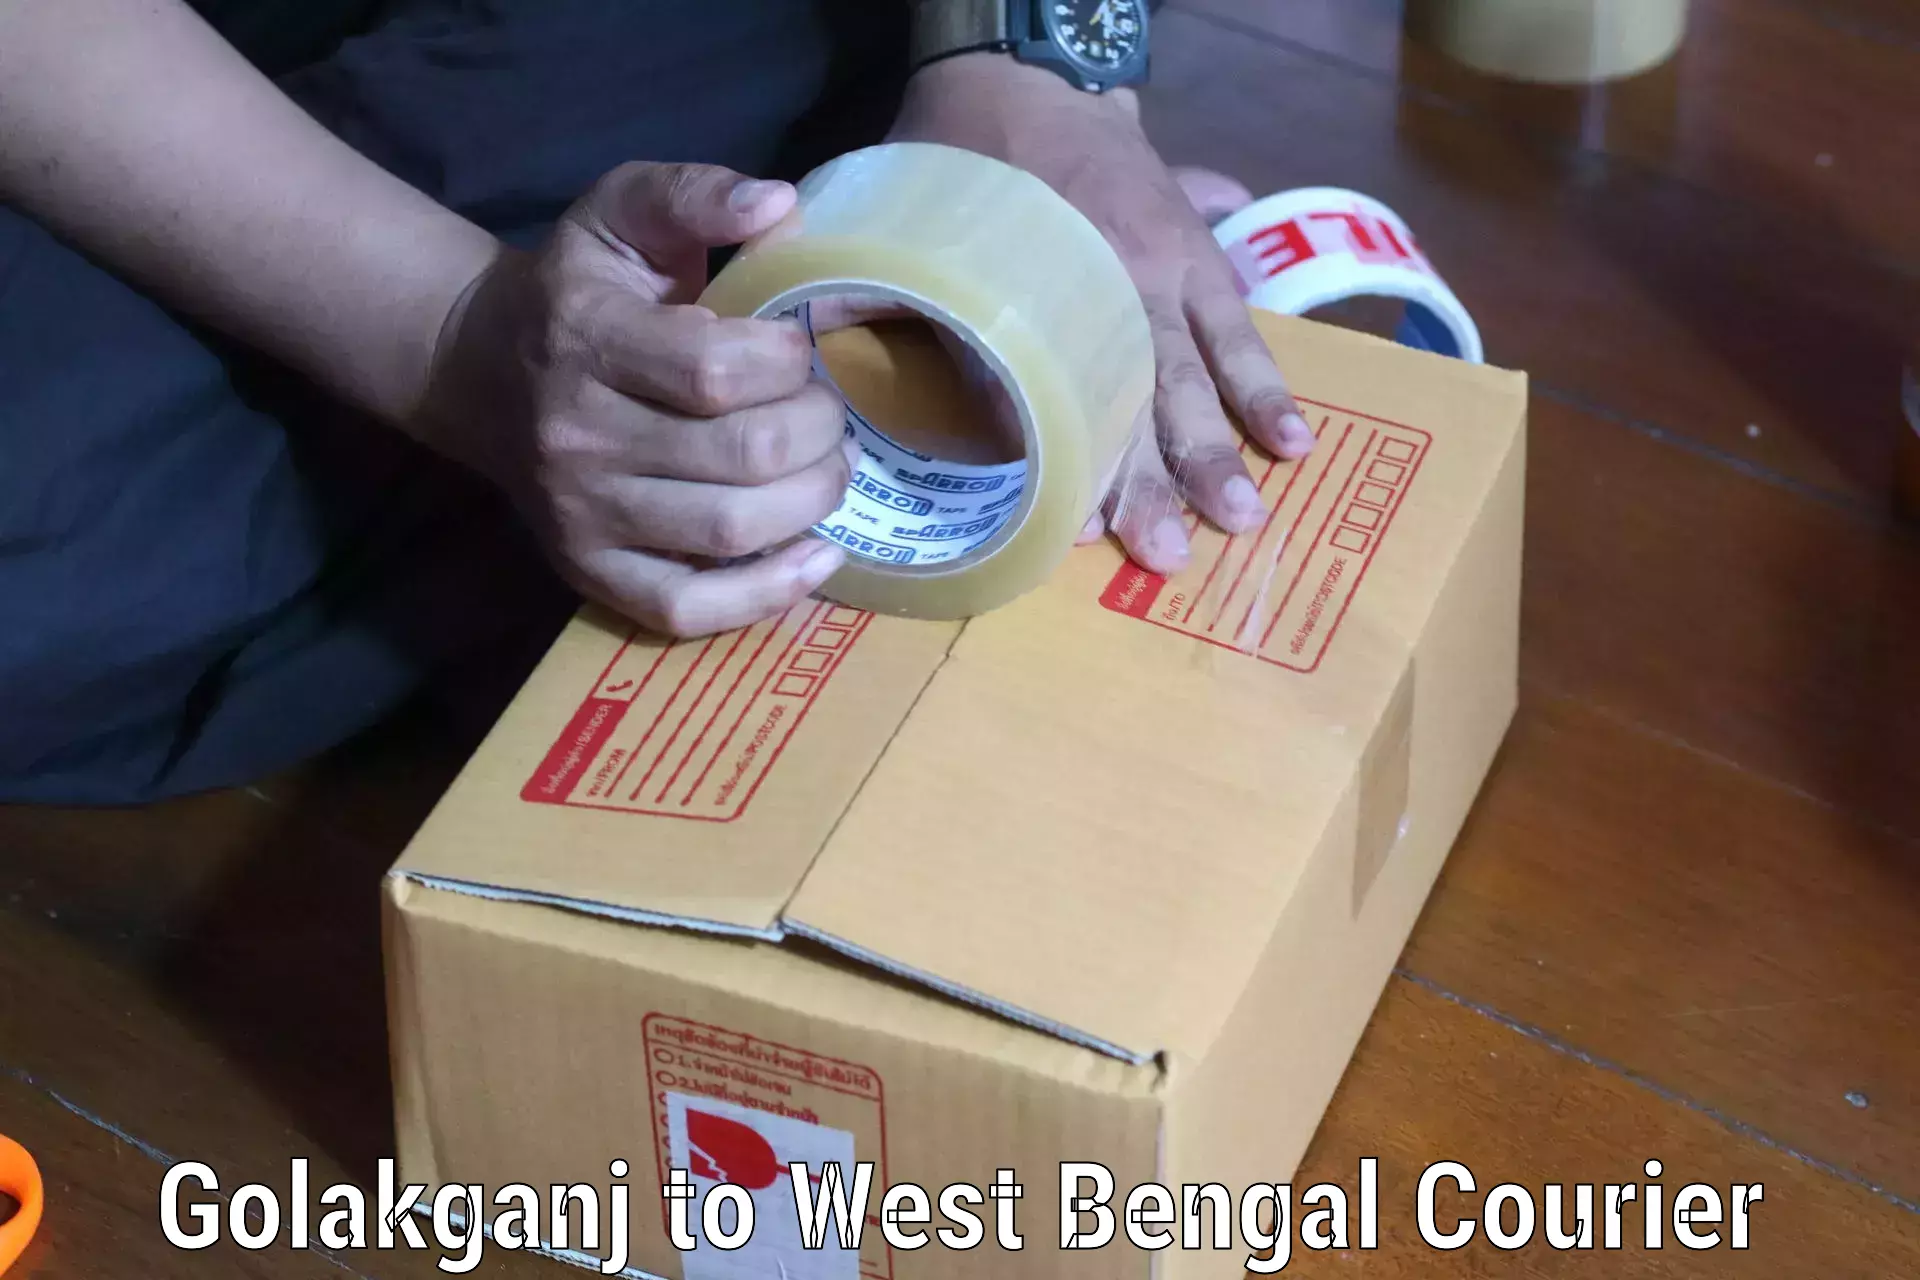 Reliable delivery network Golakganj to Kolkata